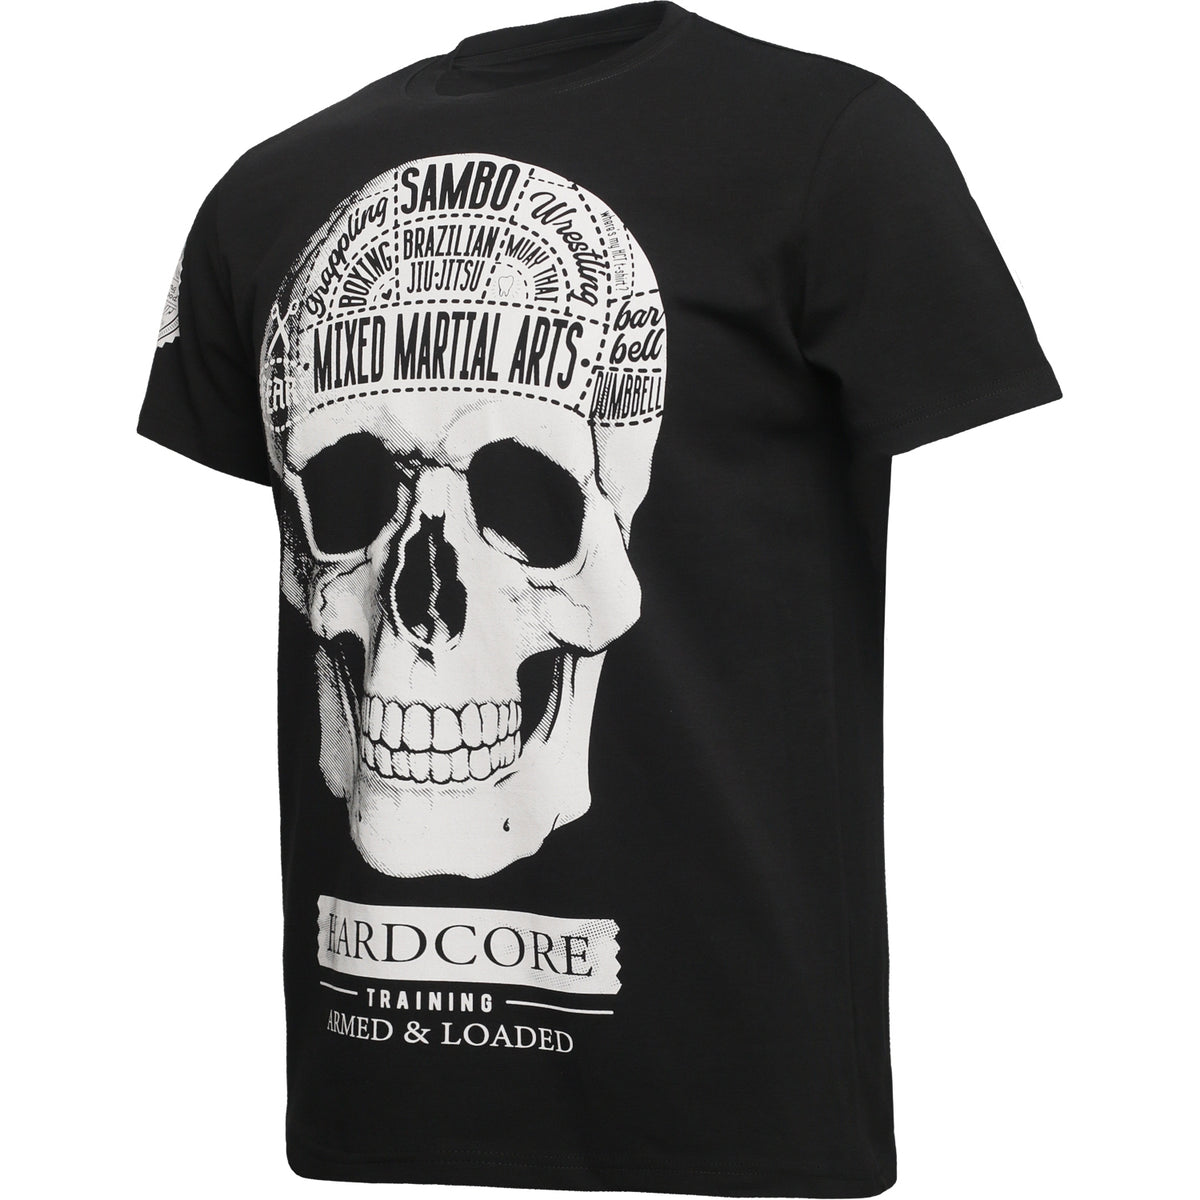 T-Shirt Jogo do Bicho - Black Zone, T-Shirt StreetWear